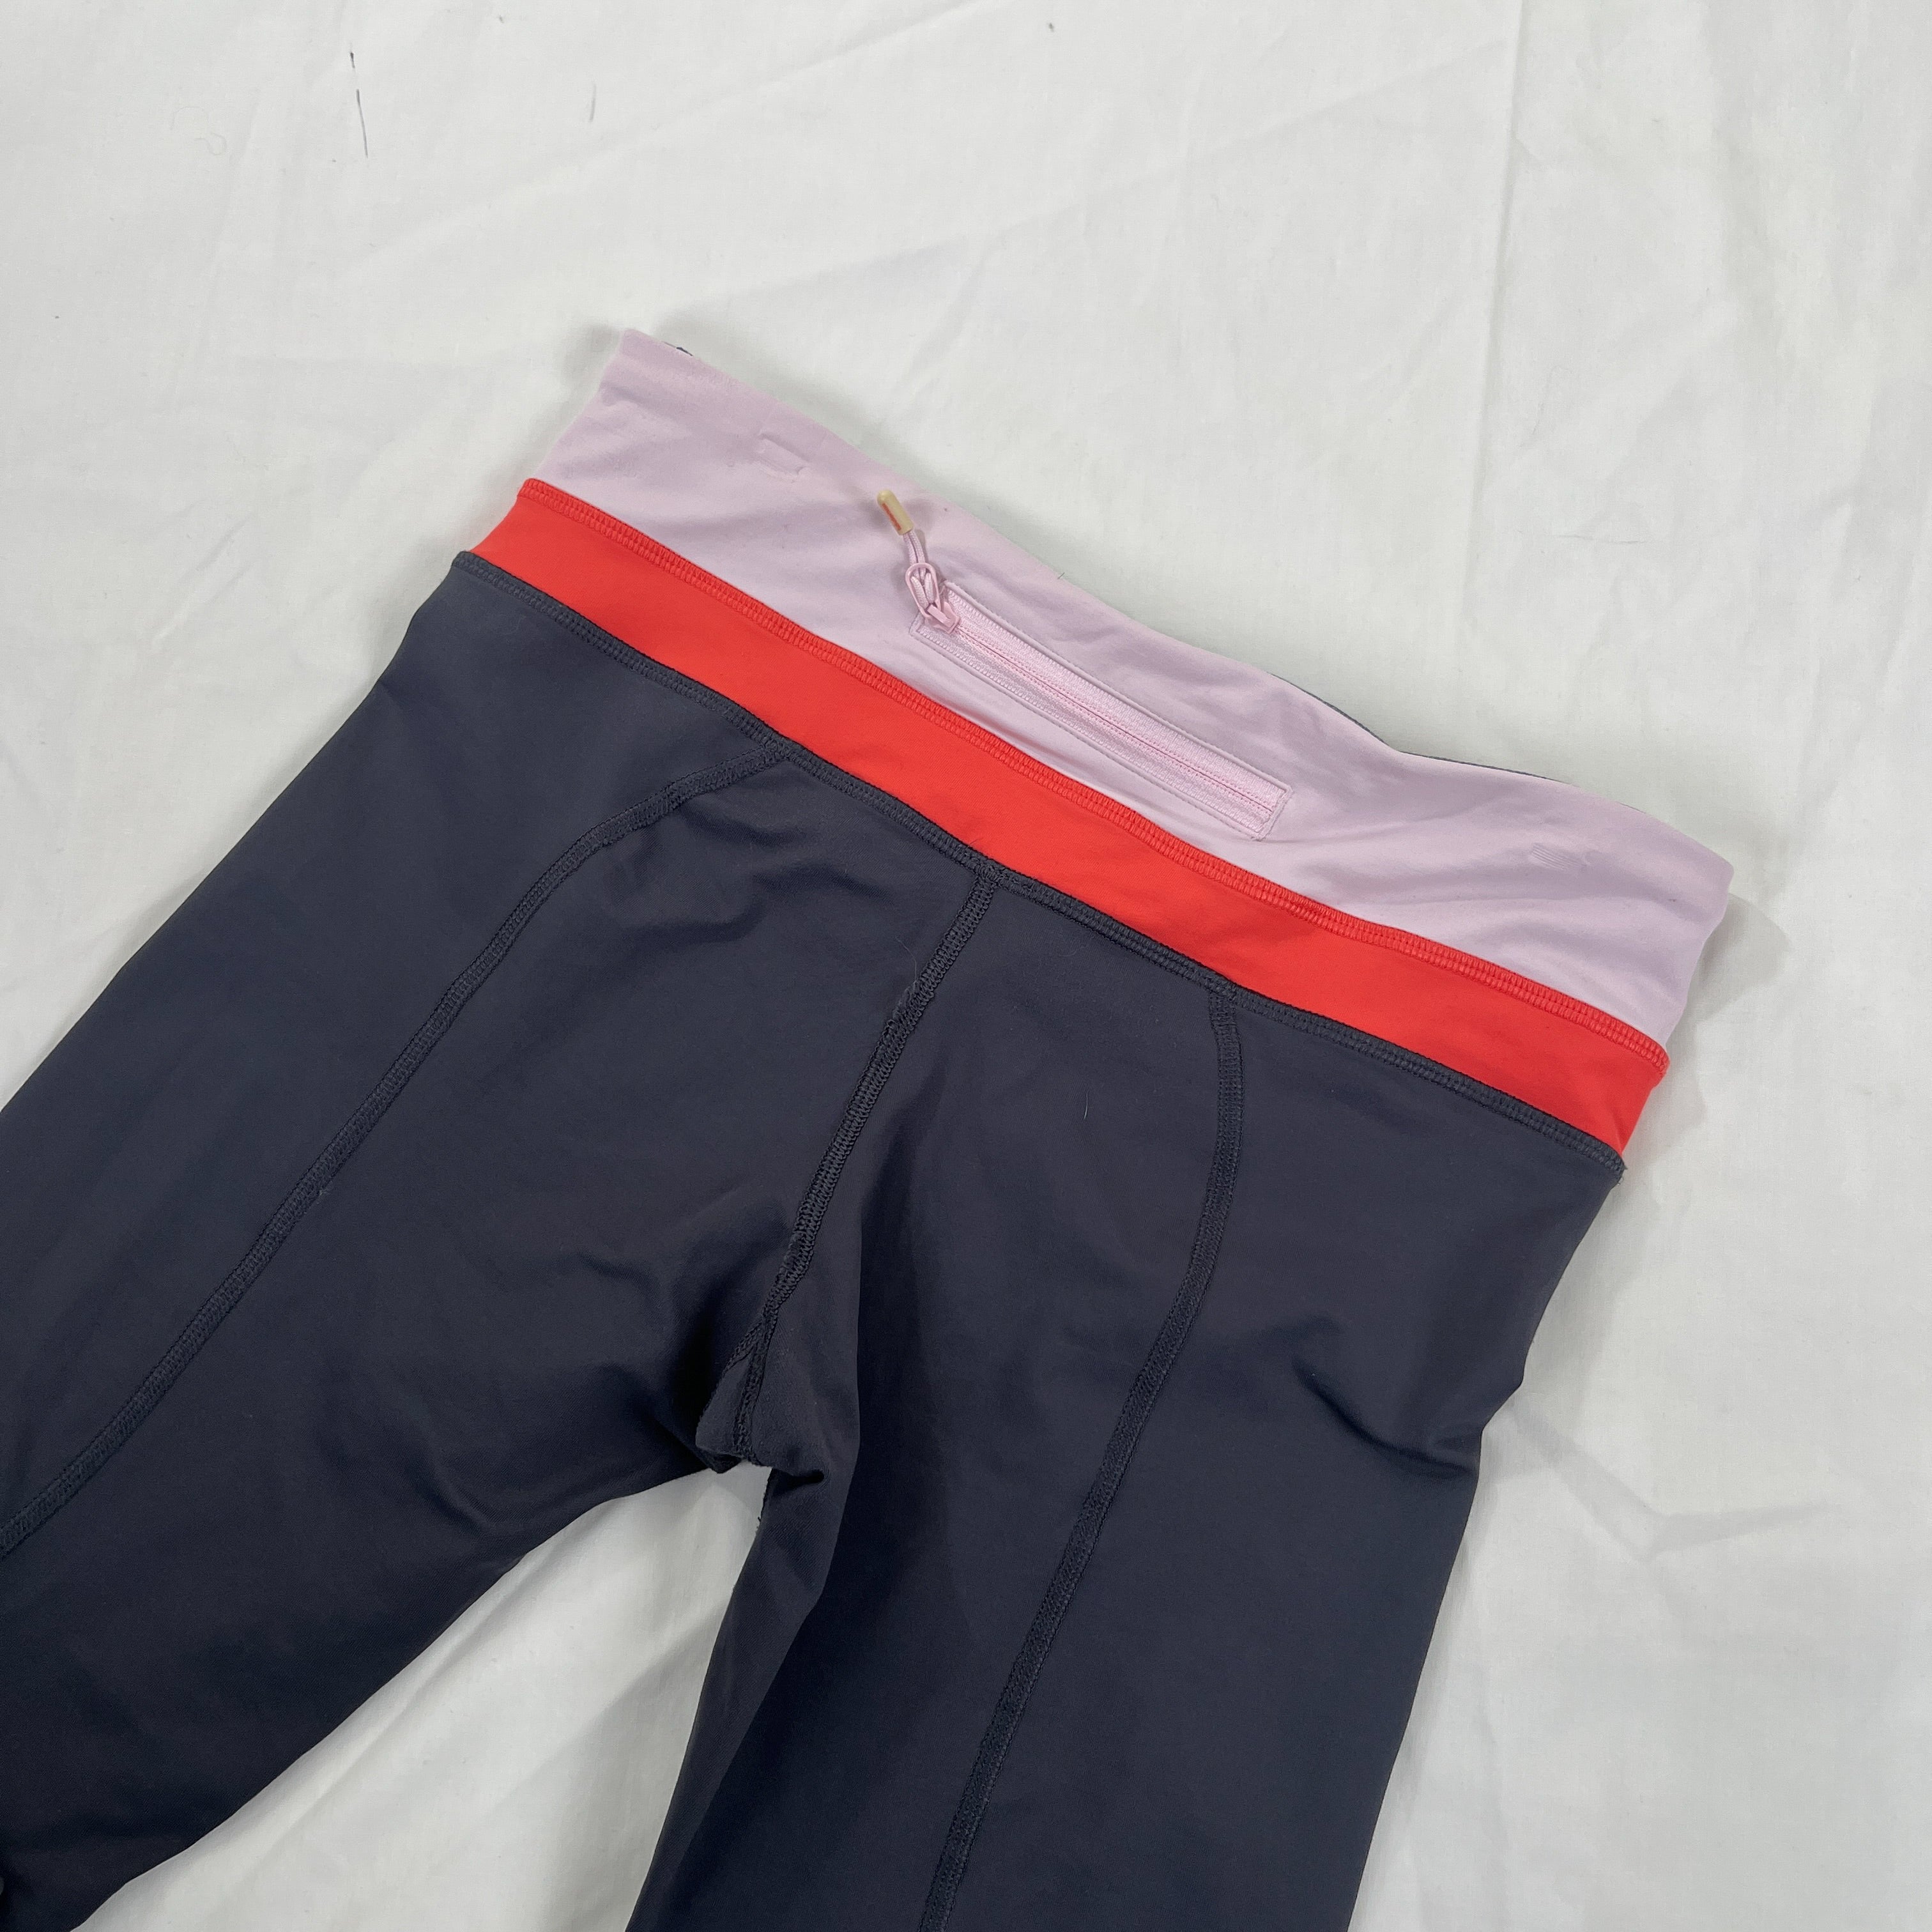 Lululemon Colour Blocked Pink and Grey Leggings – Double Take